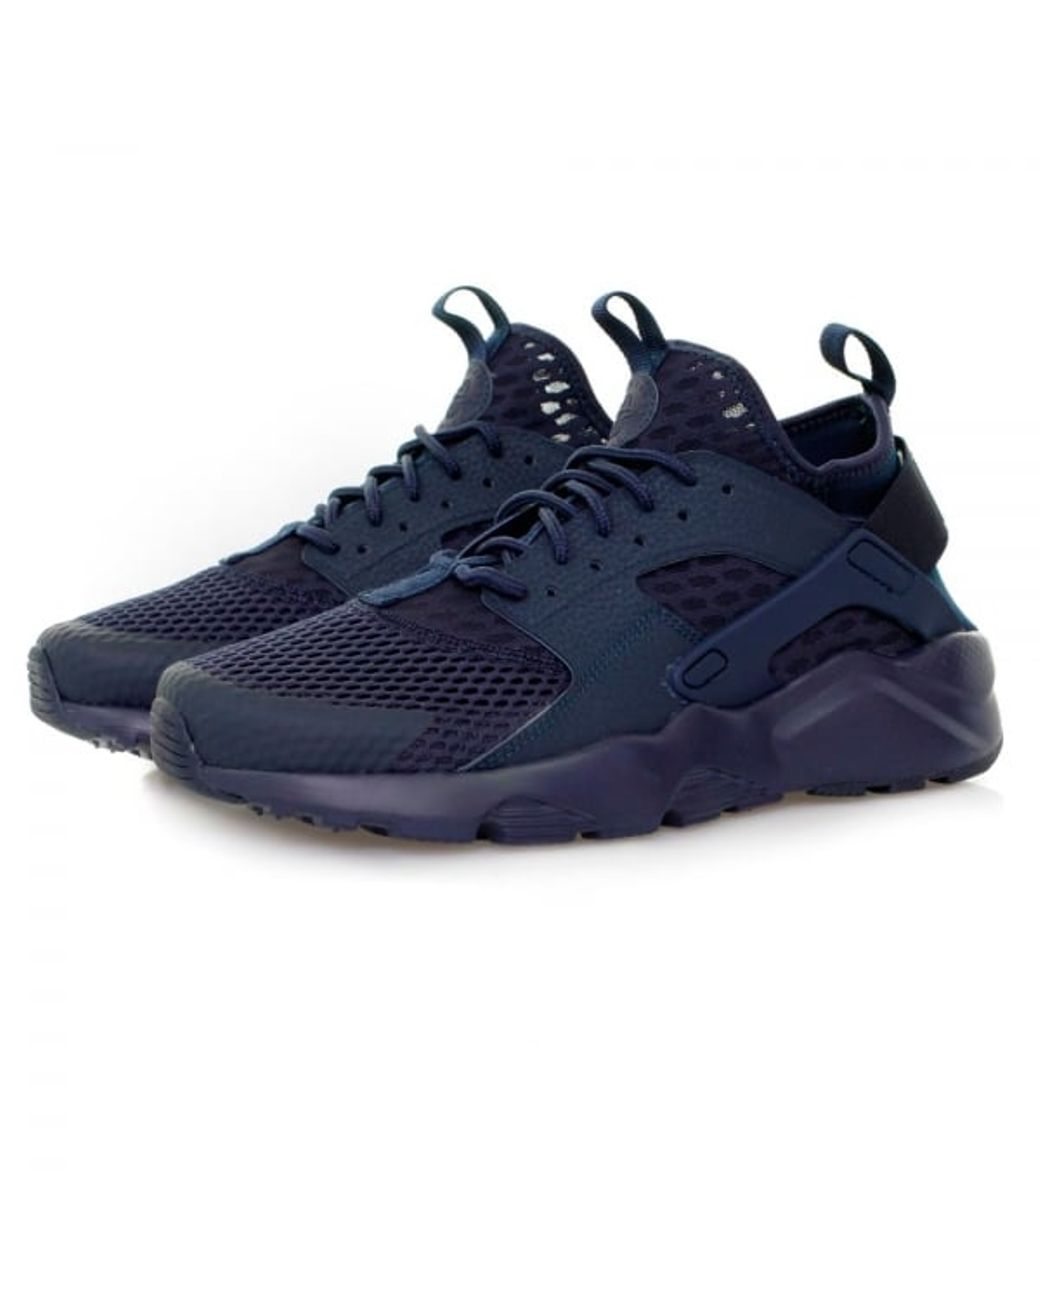 Nike Huarache Ultra Breathe Midnight Navy Shoes 833147400 for Men Lyst UK